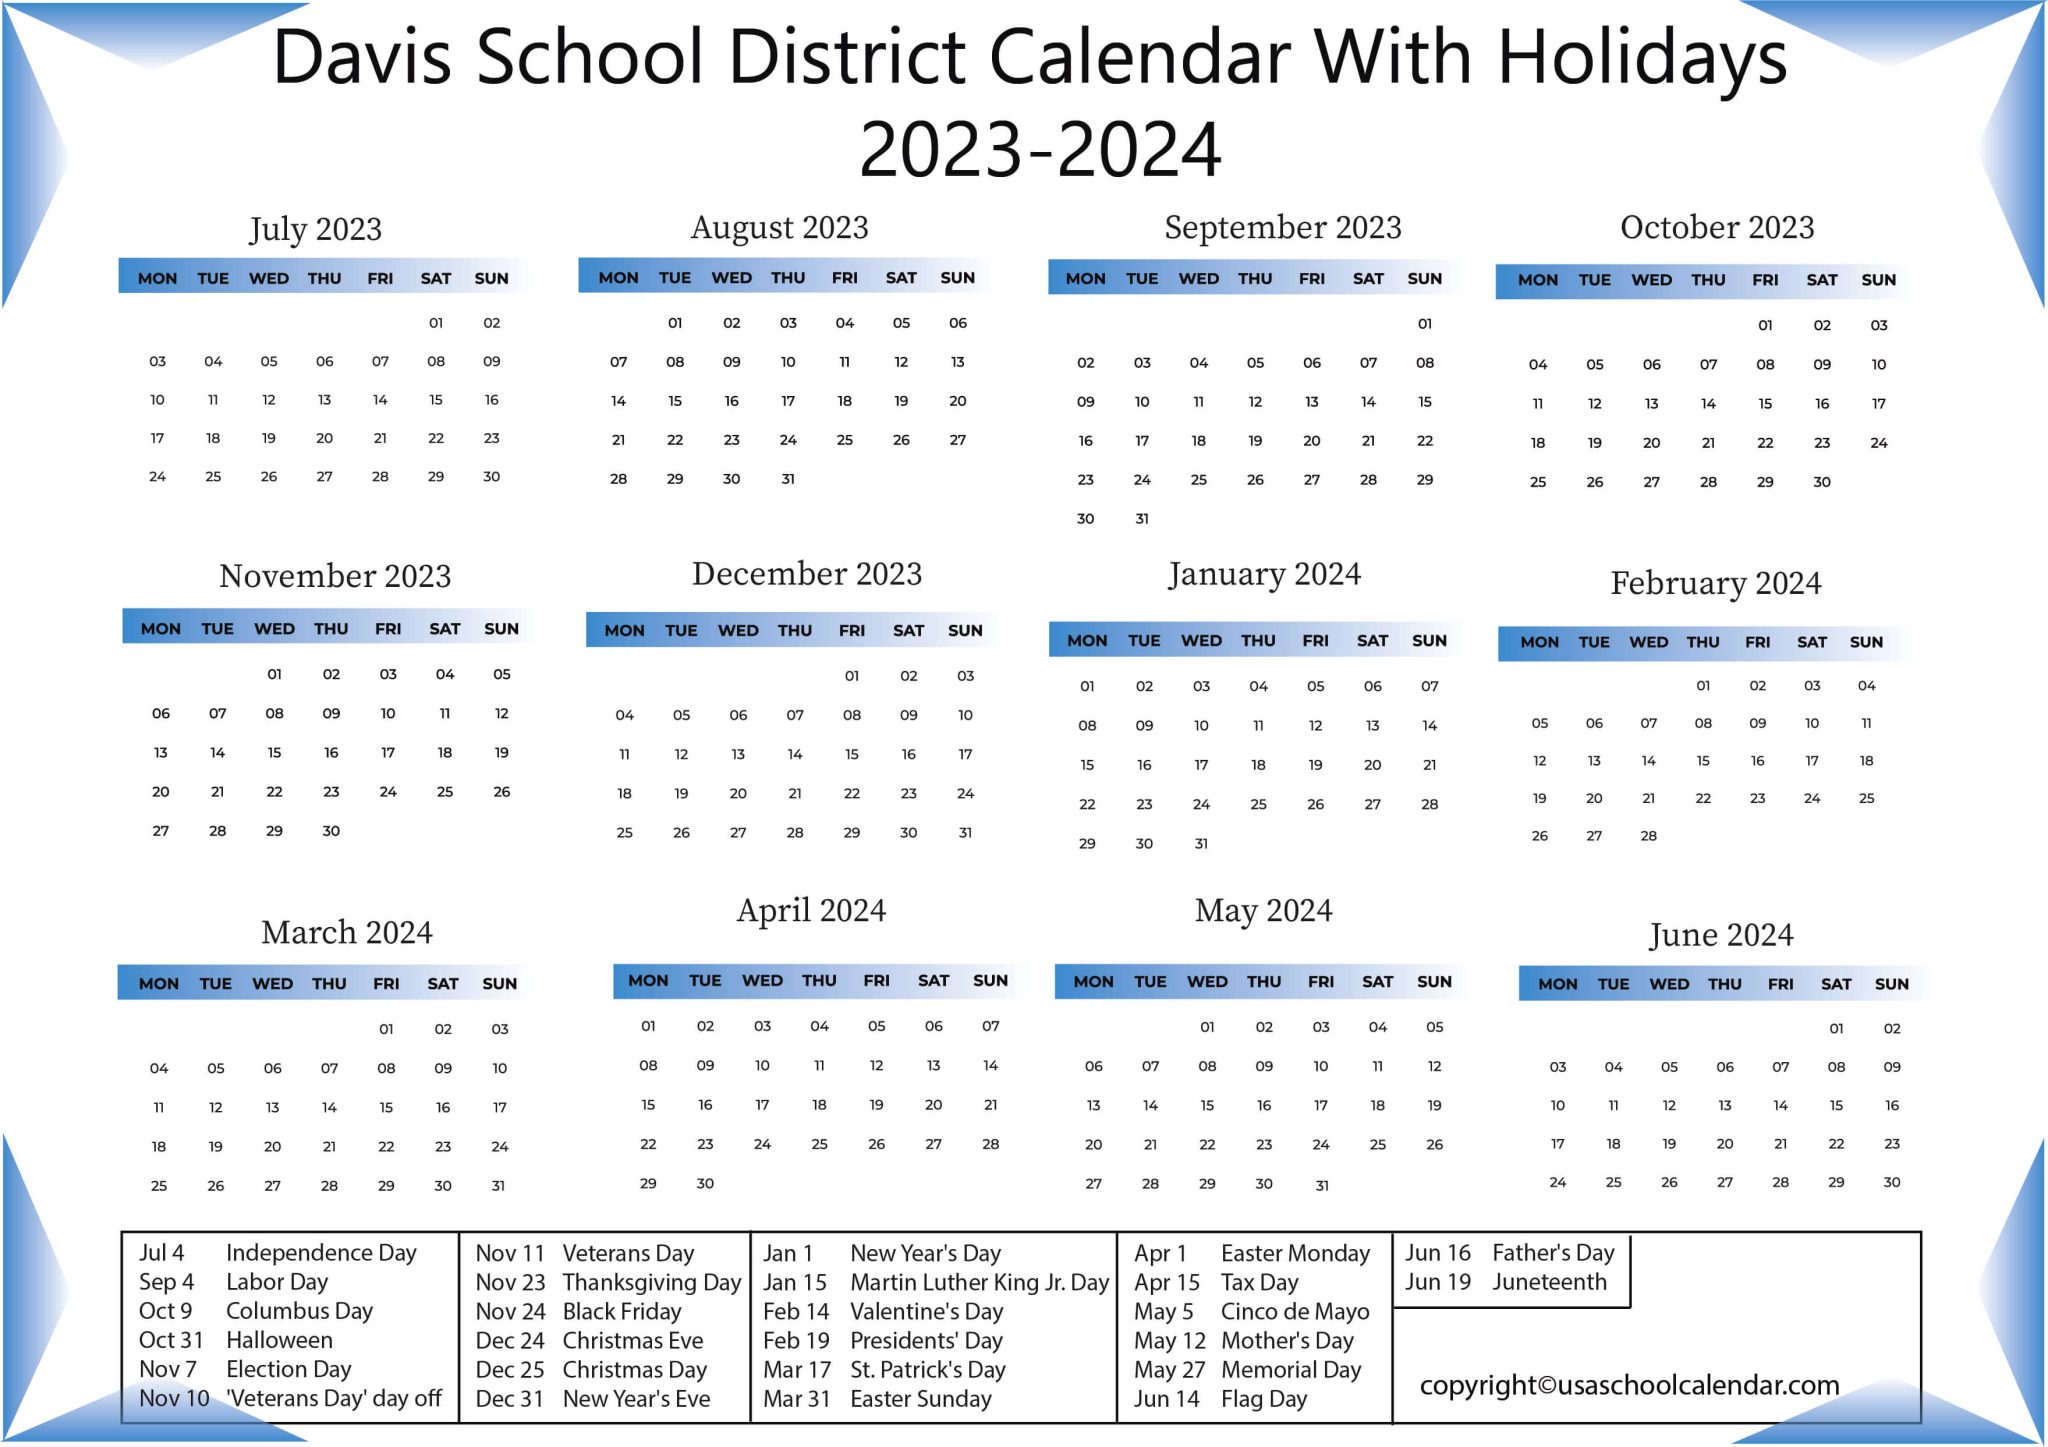 Davis School District Calendar with Holidays 20232024